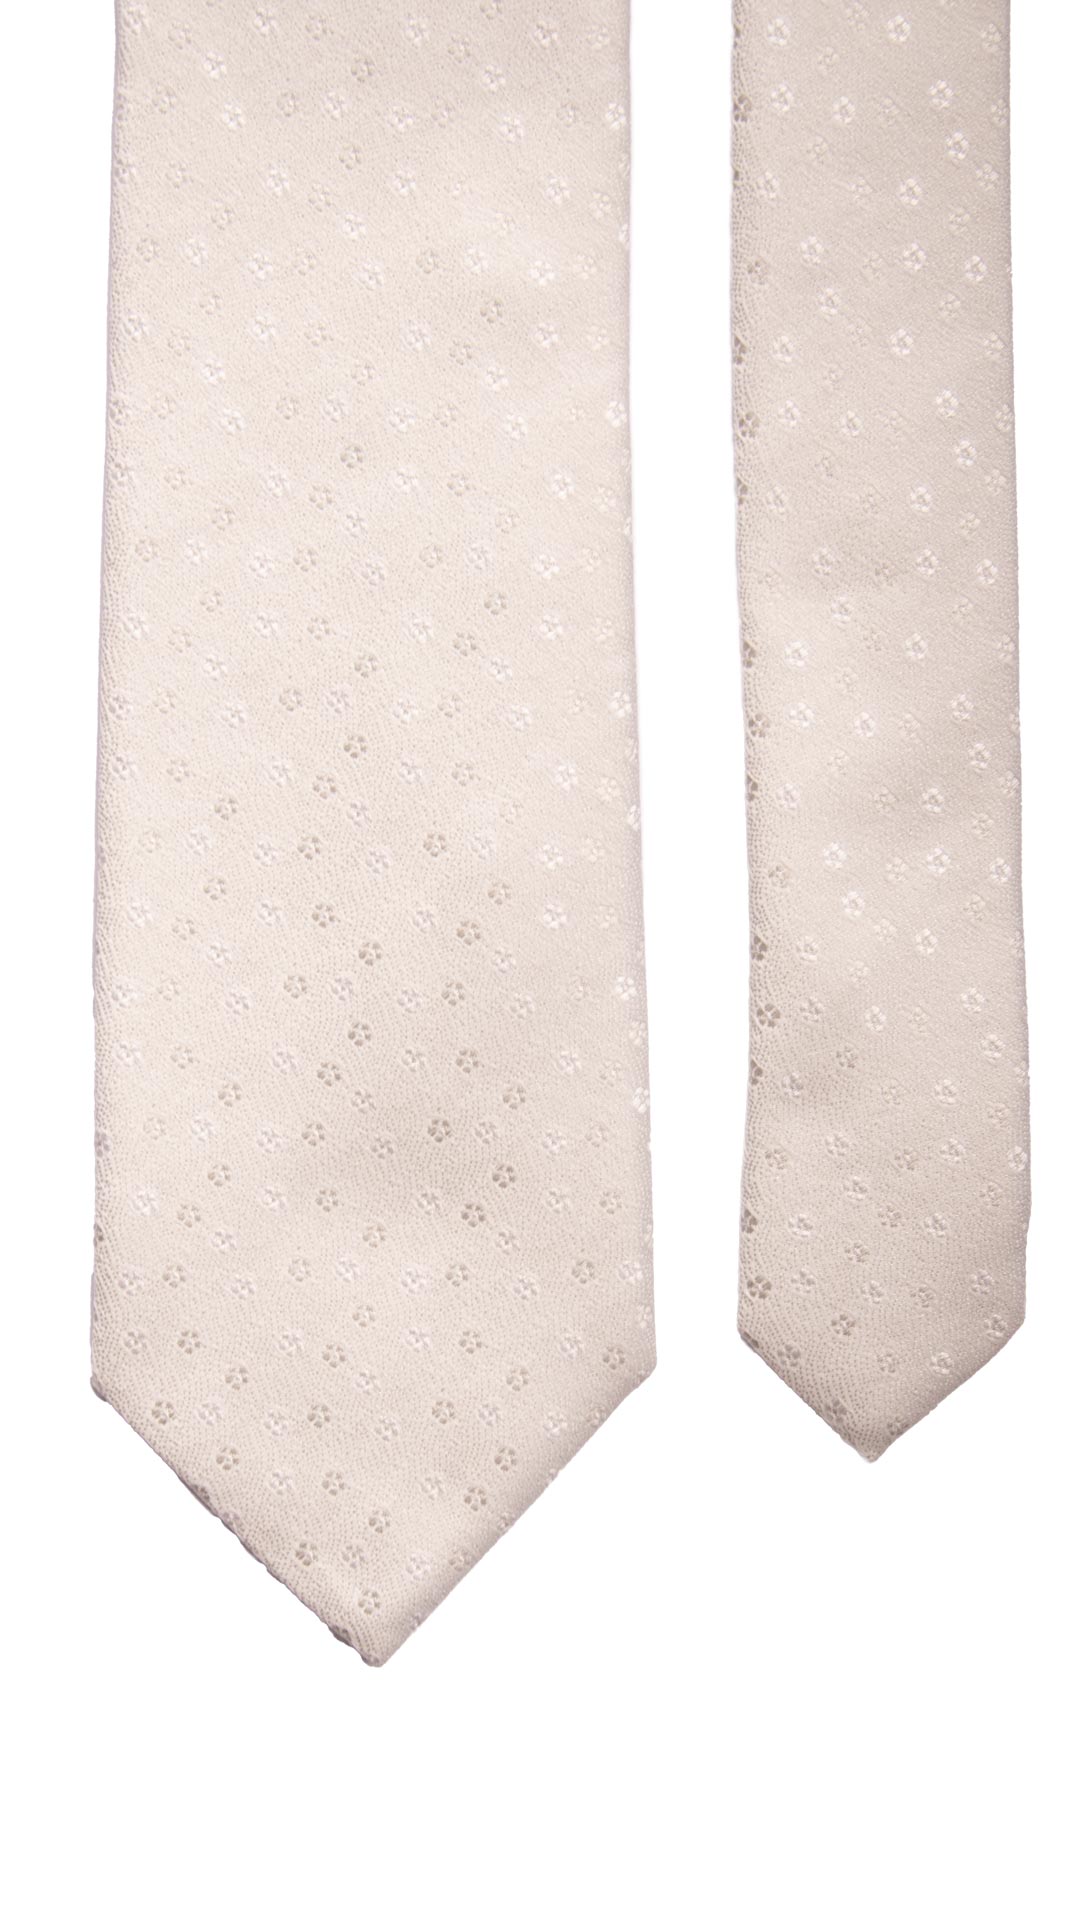 Cravatta da Cerimonia di Seta Bianco Perla Cangiante a Fiori Grigi Made in Italy Graffeo Cravatte Pala